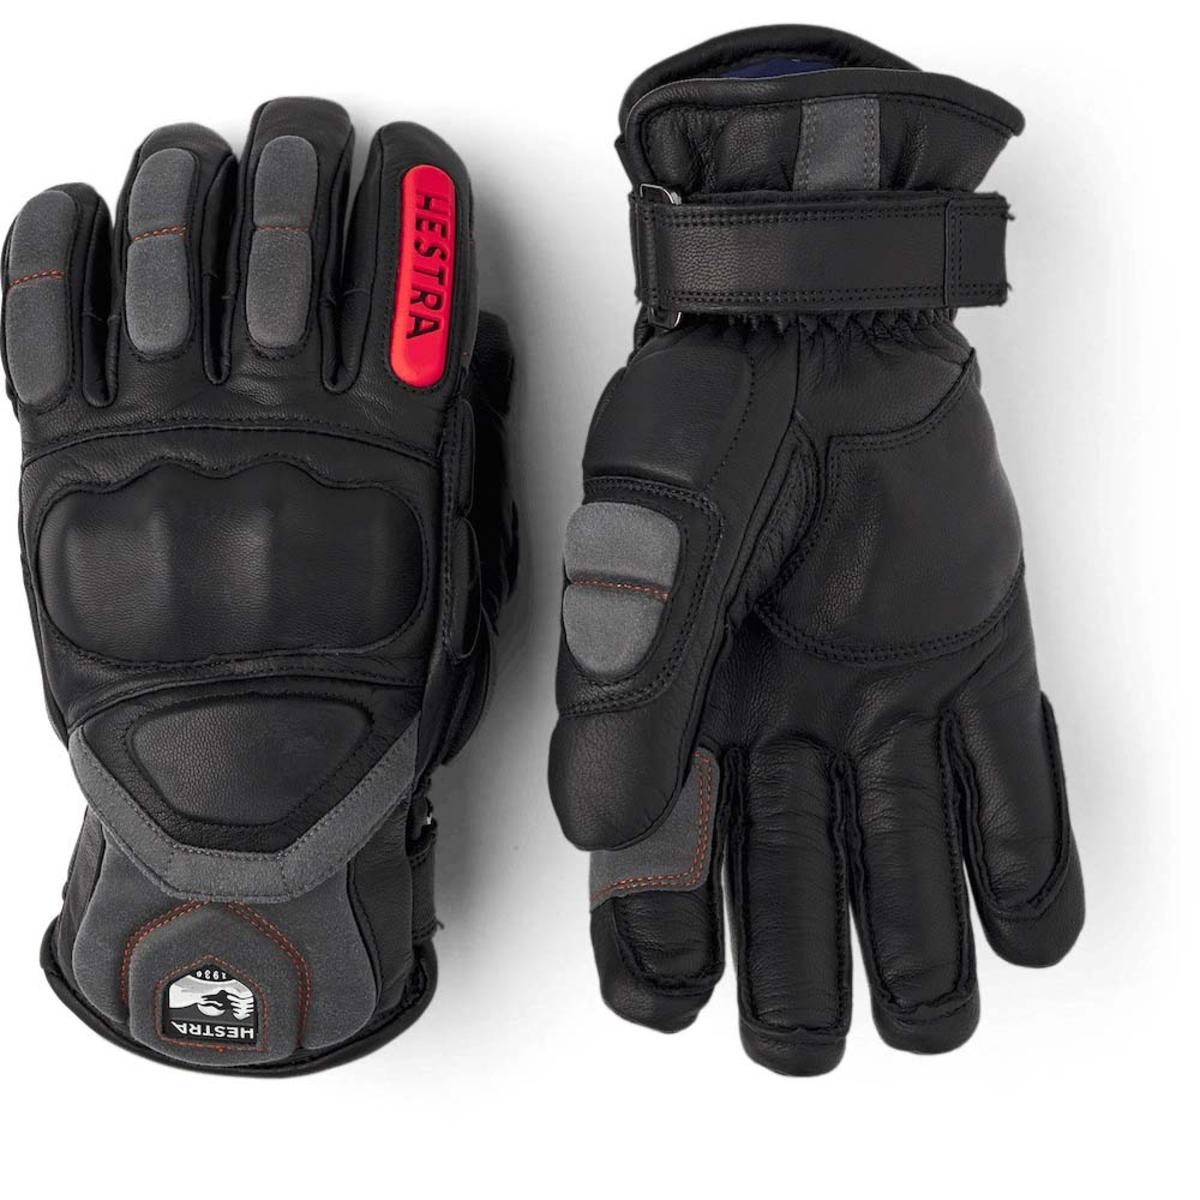 Hestra Impact Racing Senior Gloves